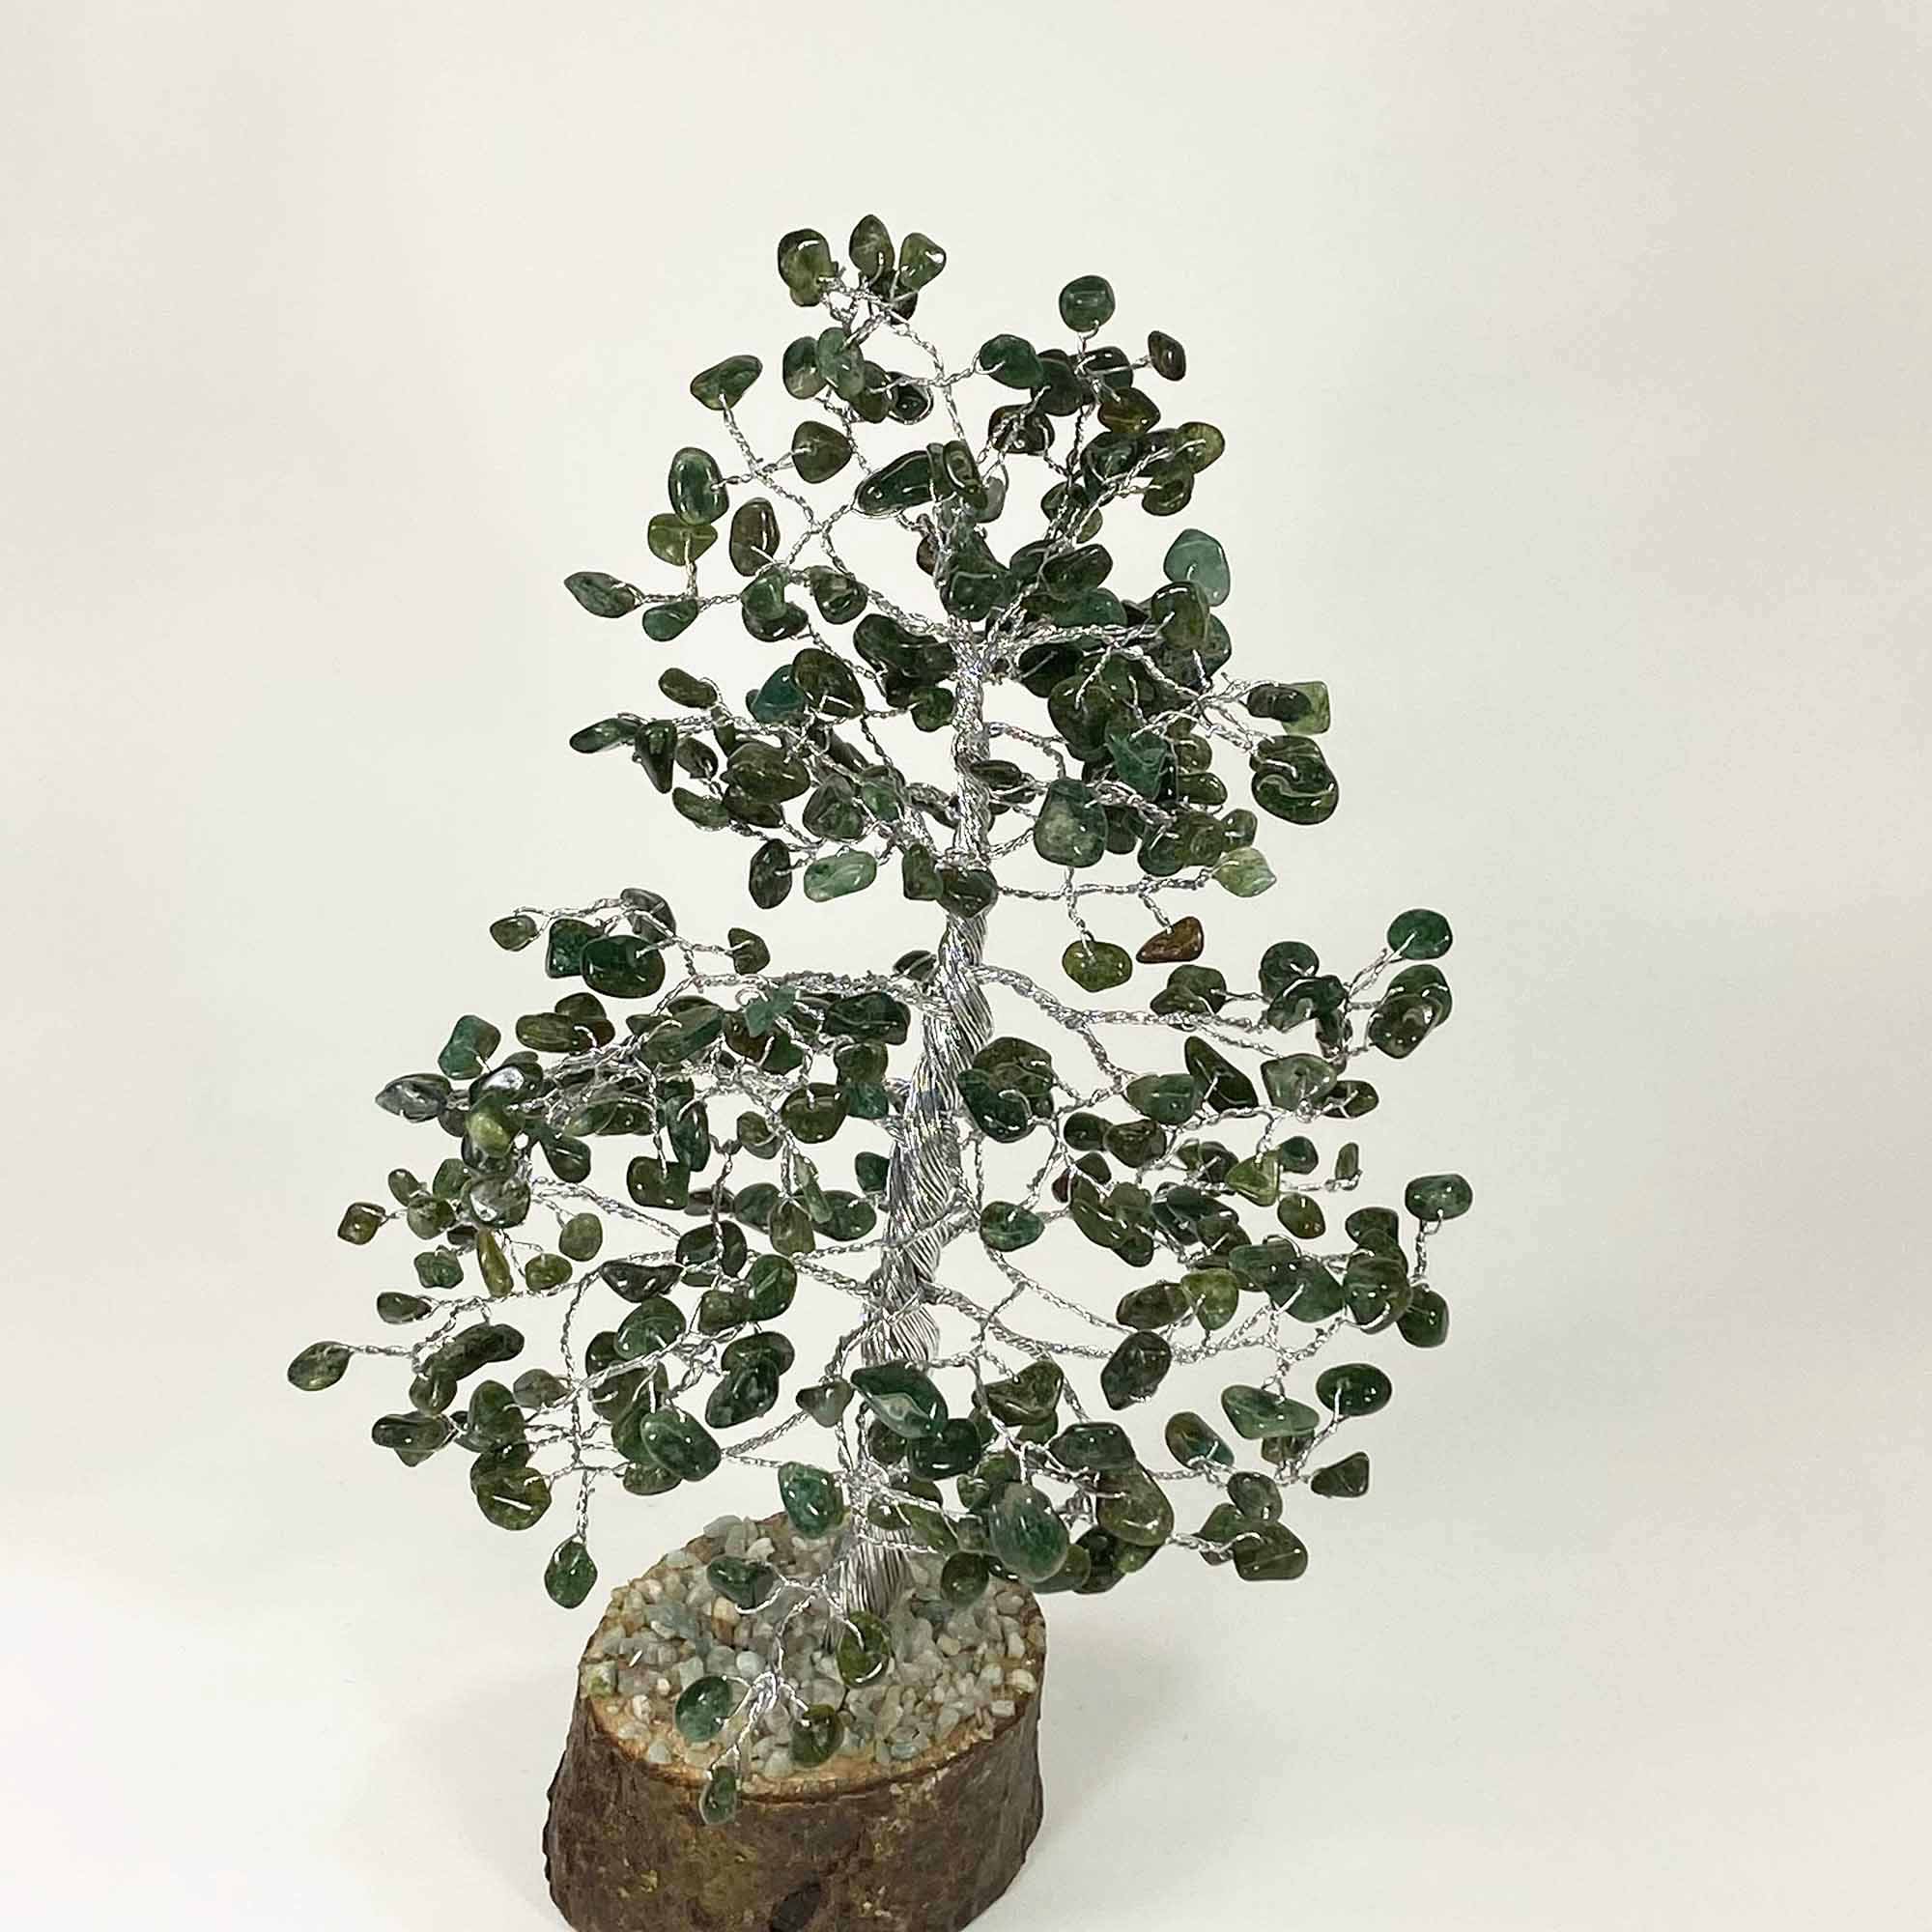 Feng Shui Gemstone Tree of Life - 300 Beads - Green Aventurine